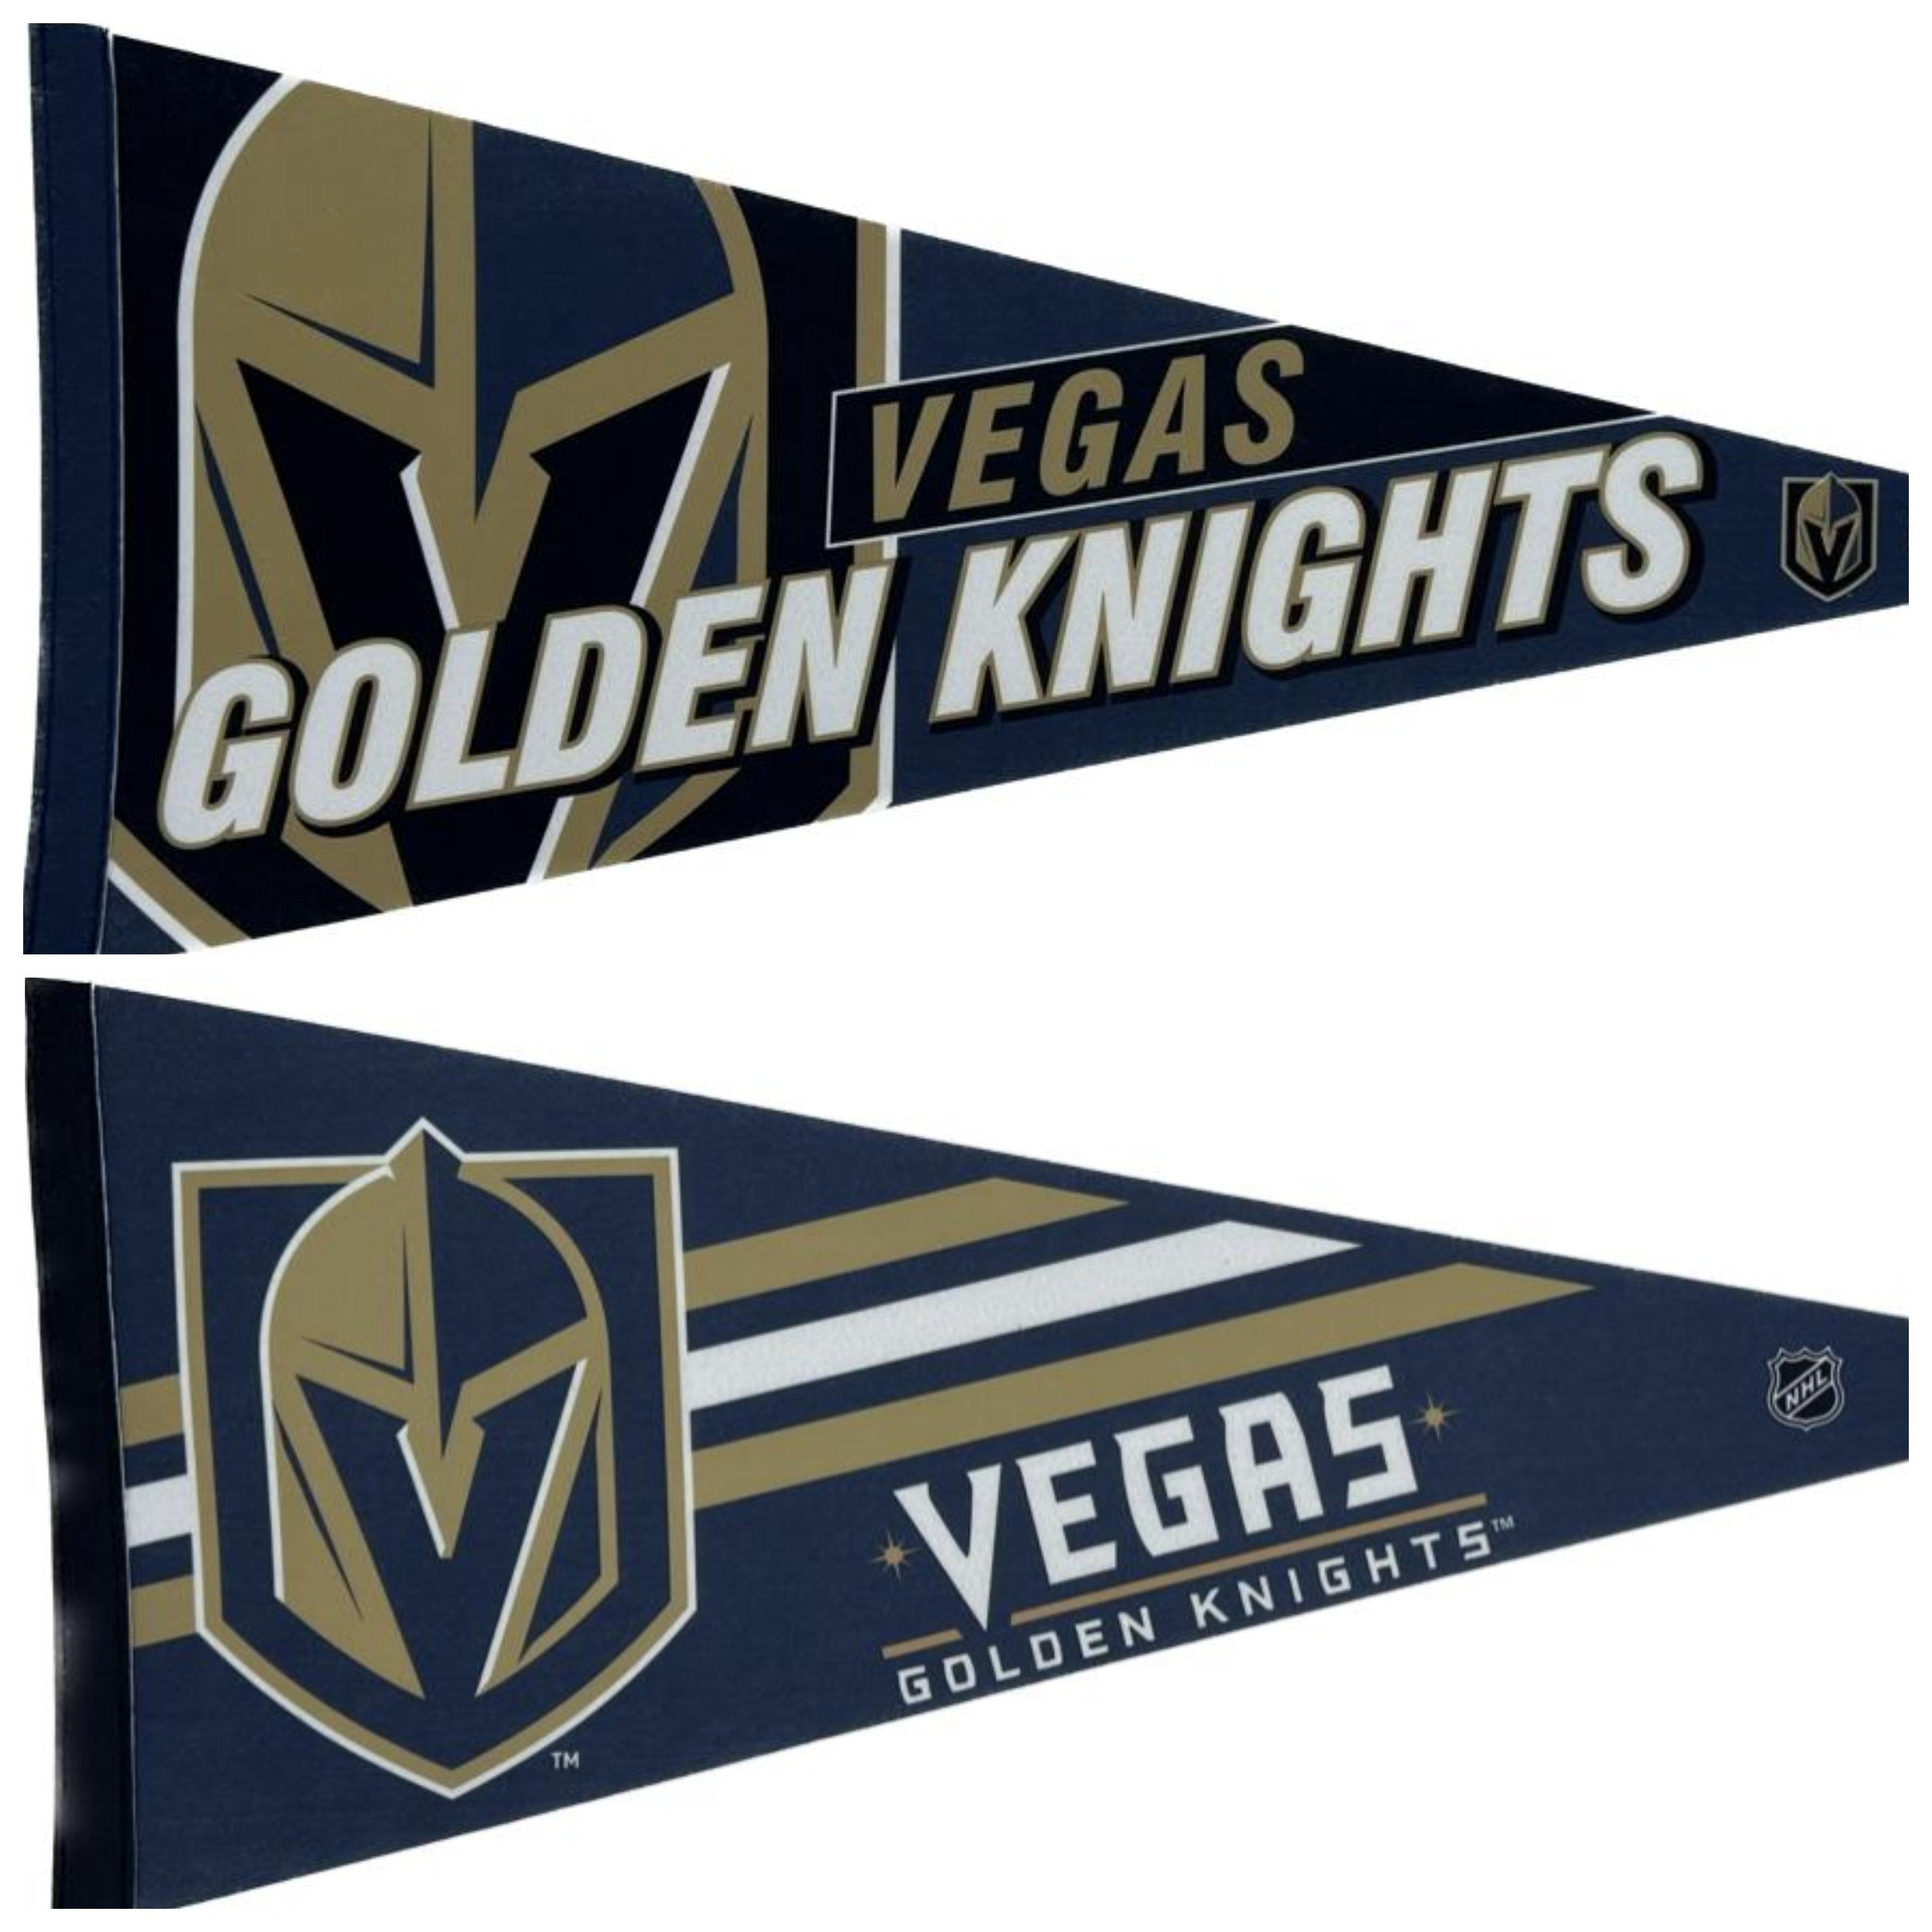 Las Vegas Golden Knights NHL pennants vaantje vlaggetje vlag fanion pennant flag drapeau ice hockey ijshockey usa ice skating usa america - Puck